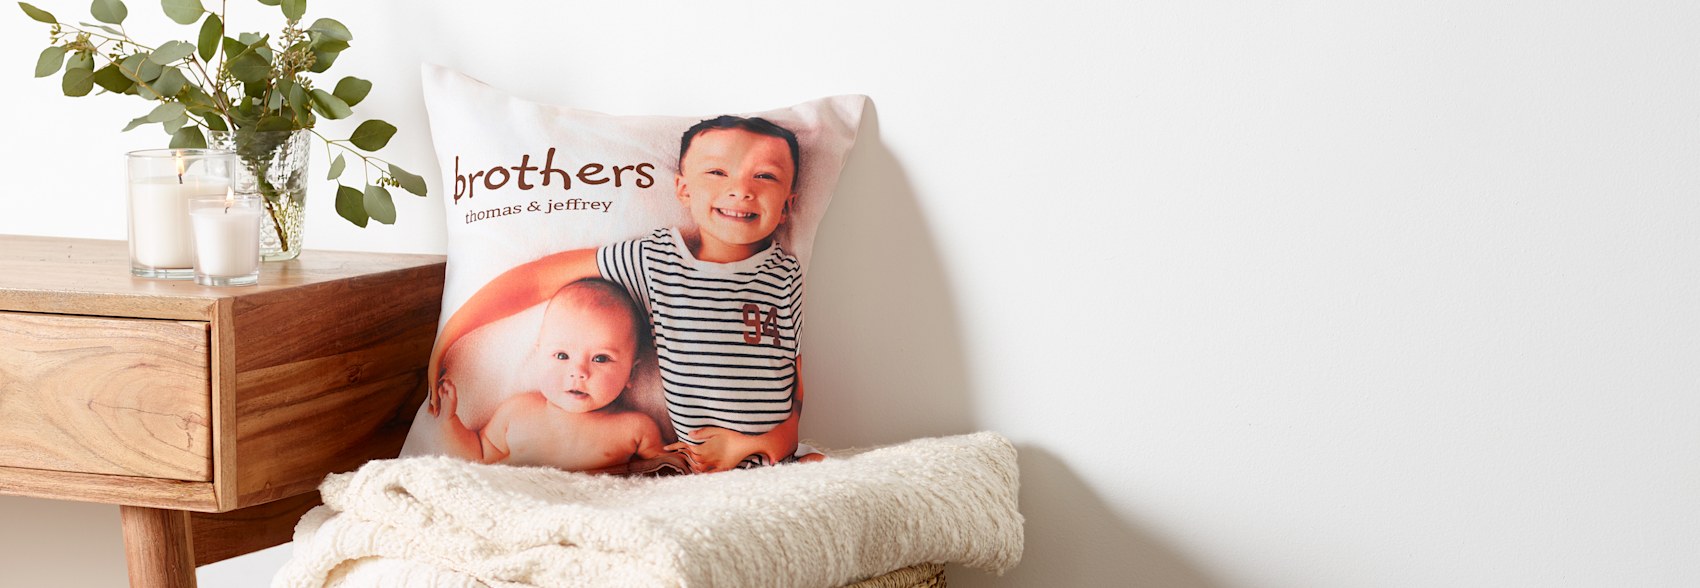  custom pillows with kids photos